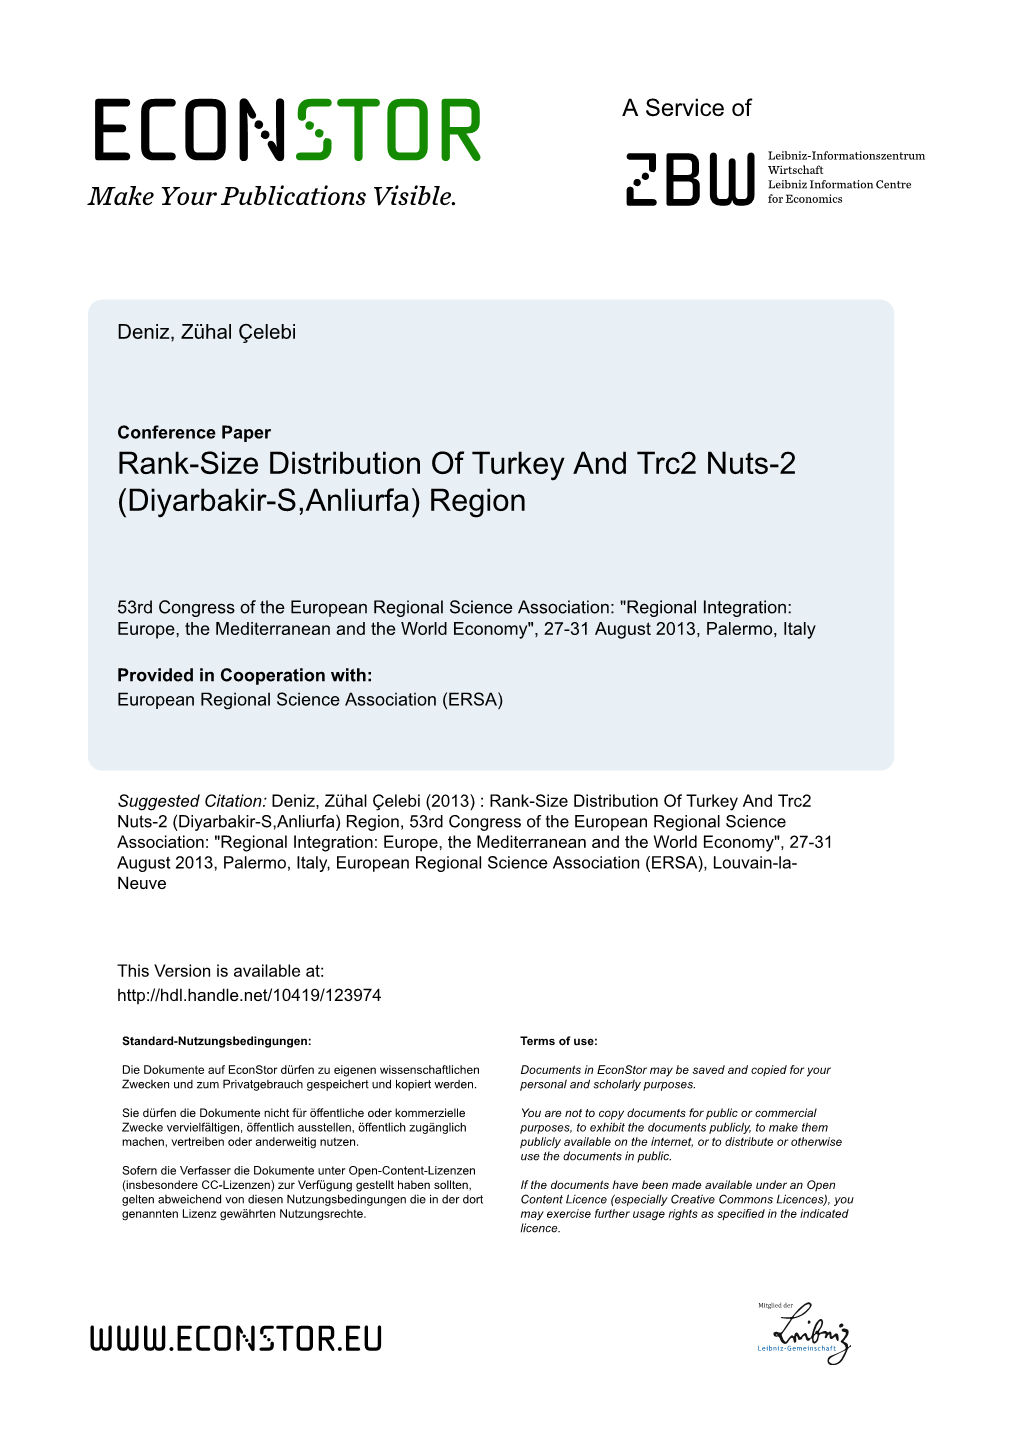 Rank-Size Distribution of Turkey and Trc2 Nuts-2 (Diyarbakir-S,Anliurfa) Region